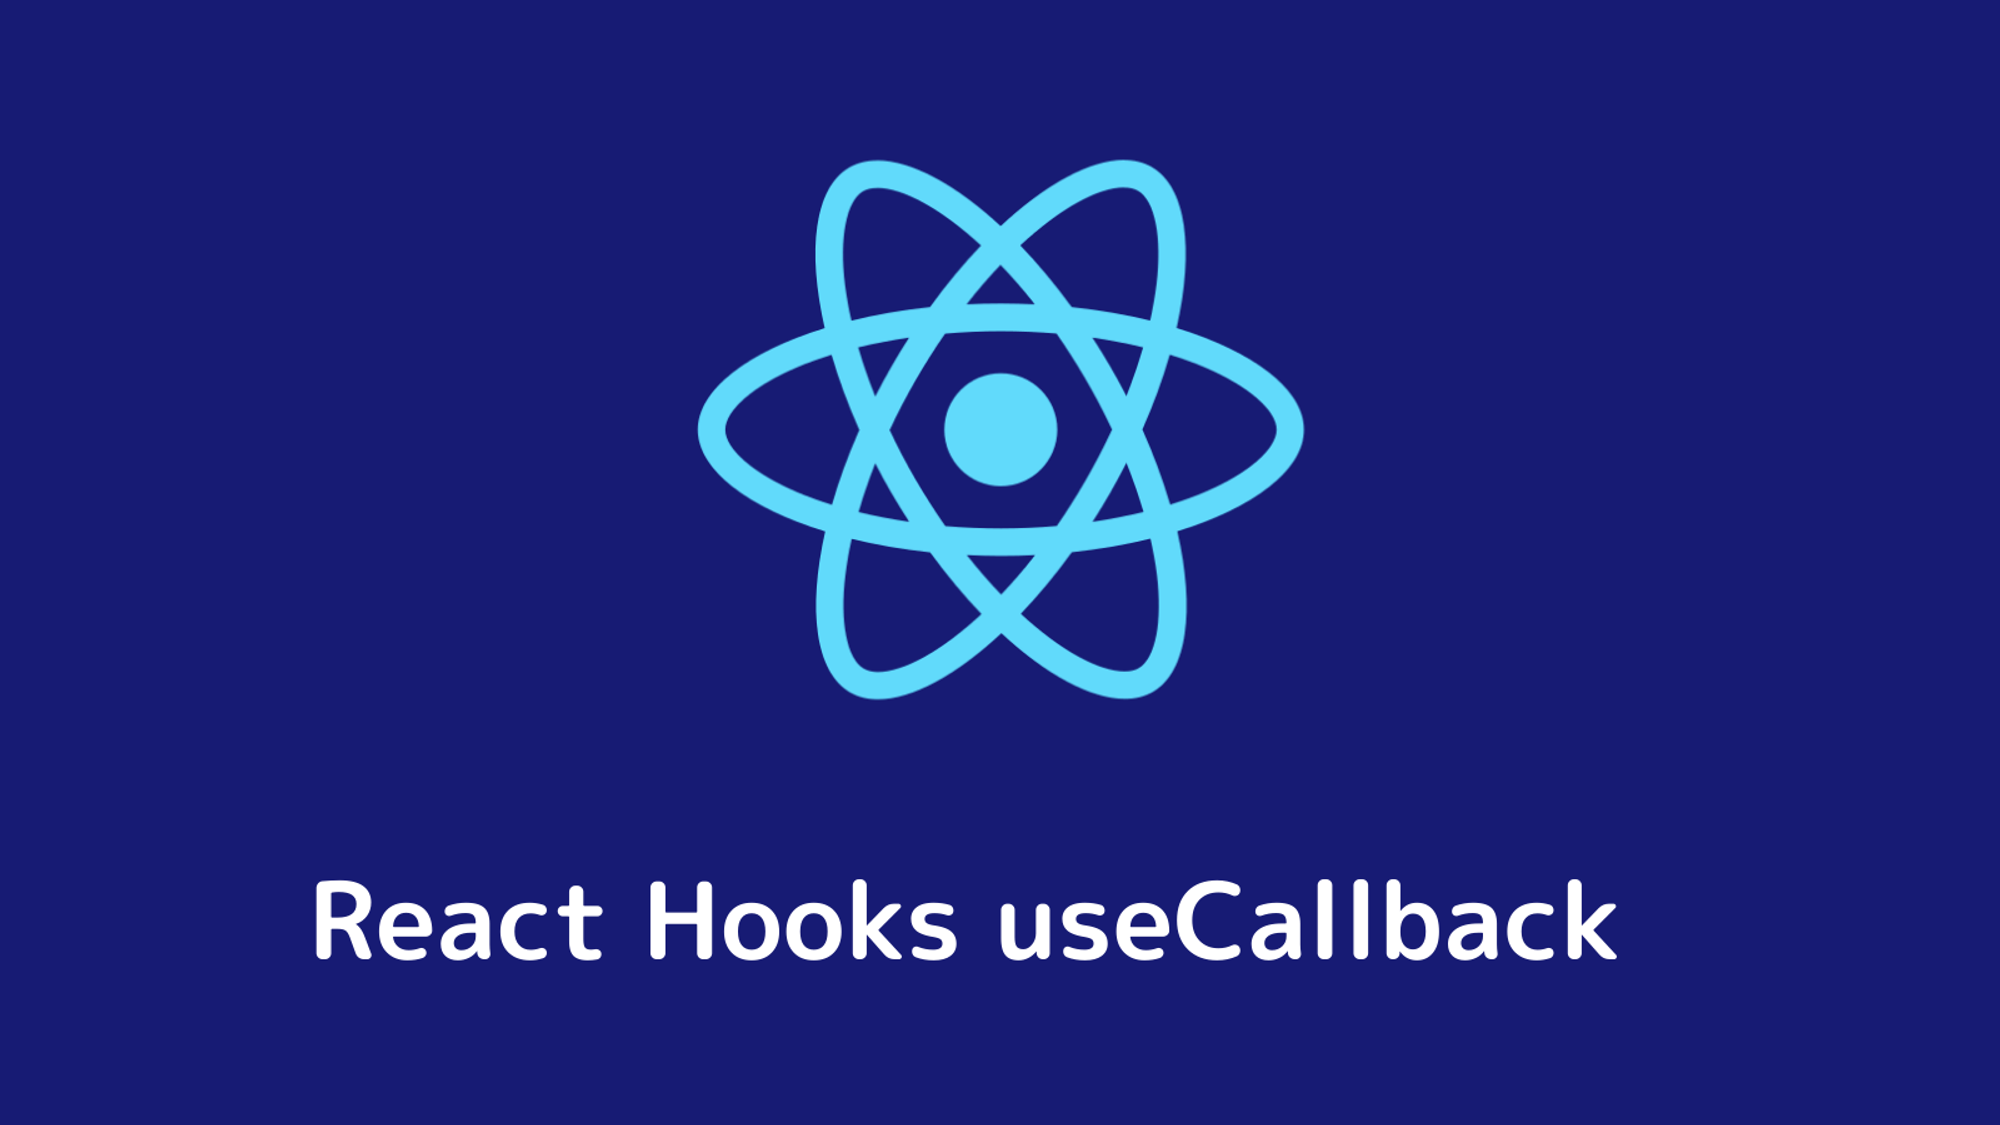 [React] React Hooks API (#2 useCallback)